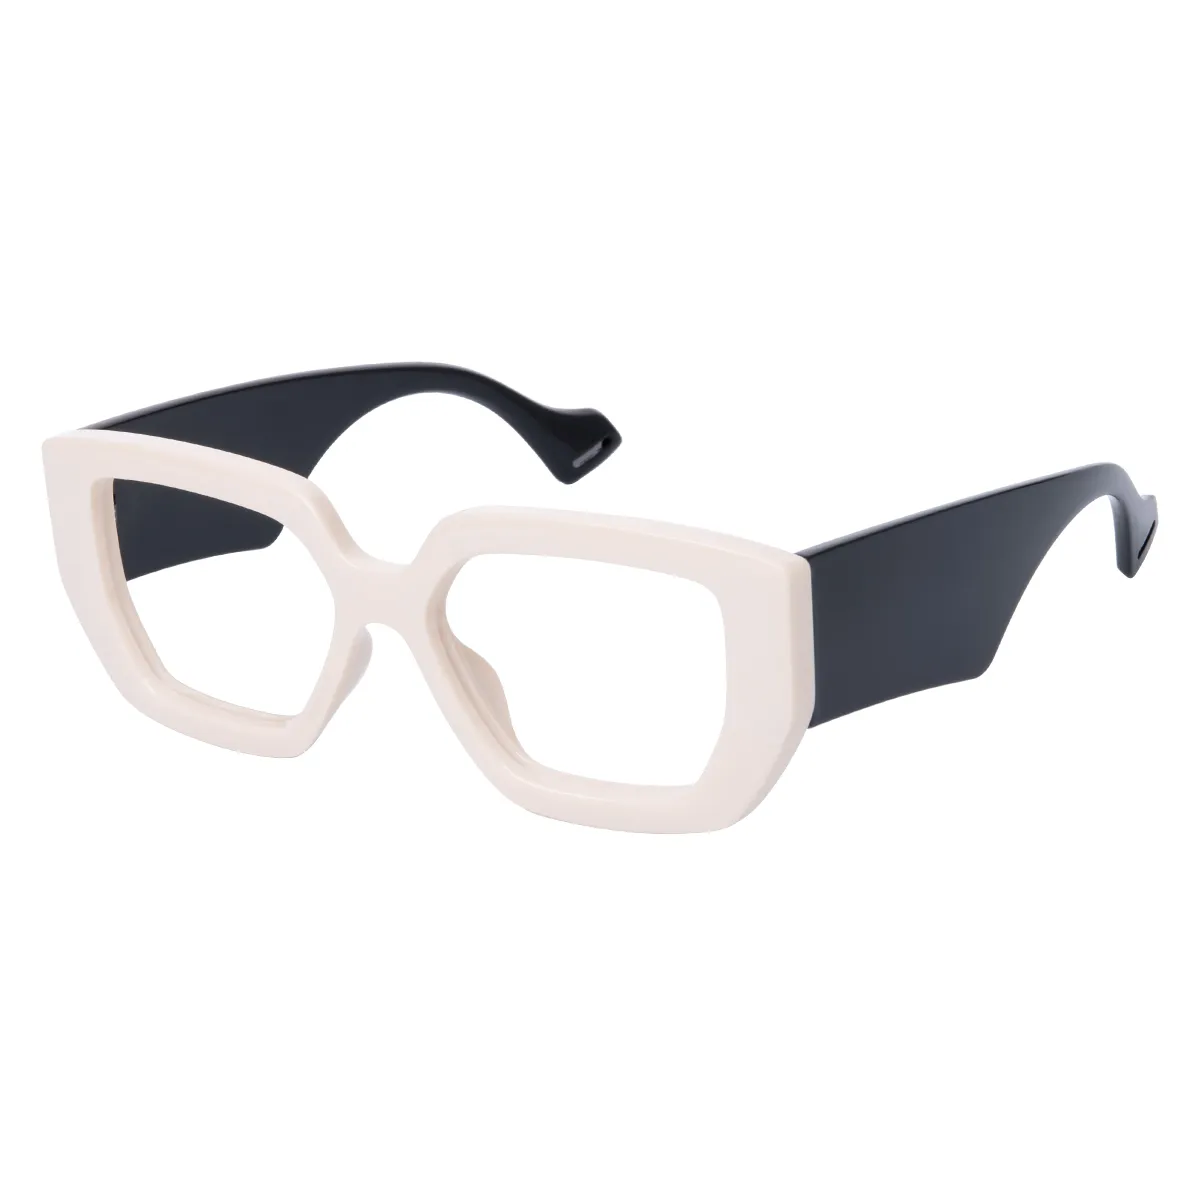 Seraphina - Square White-Black Glasses for Women